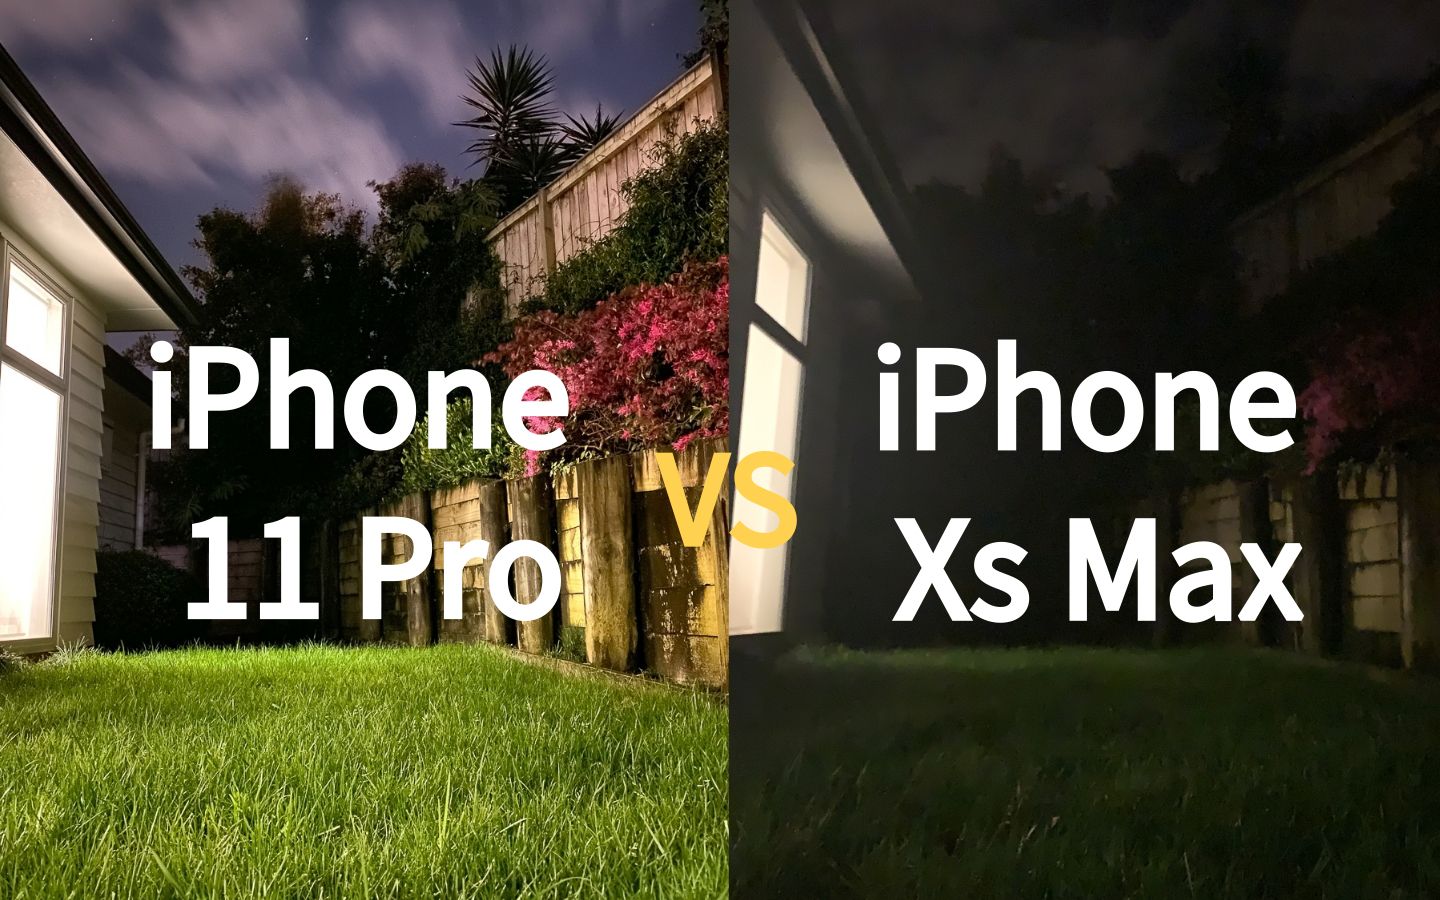 iPhone 11 Pro vs iPhone Xs Max 摄影摄像对比， 最强摄影手机？